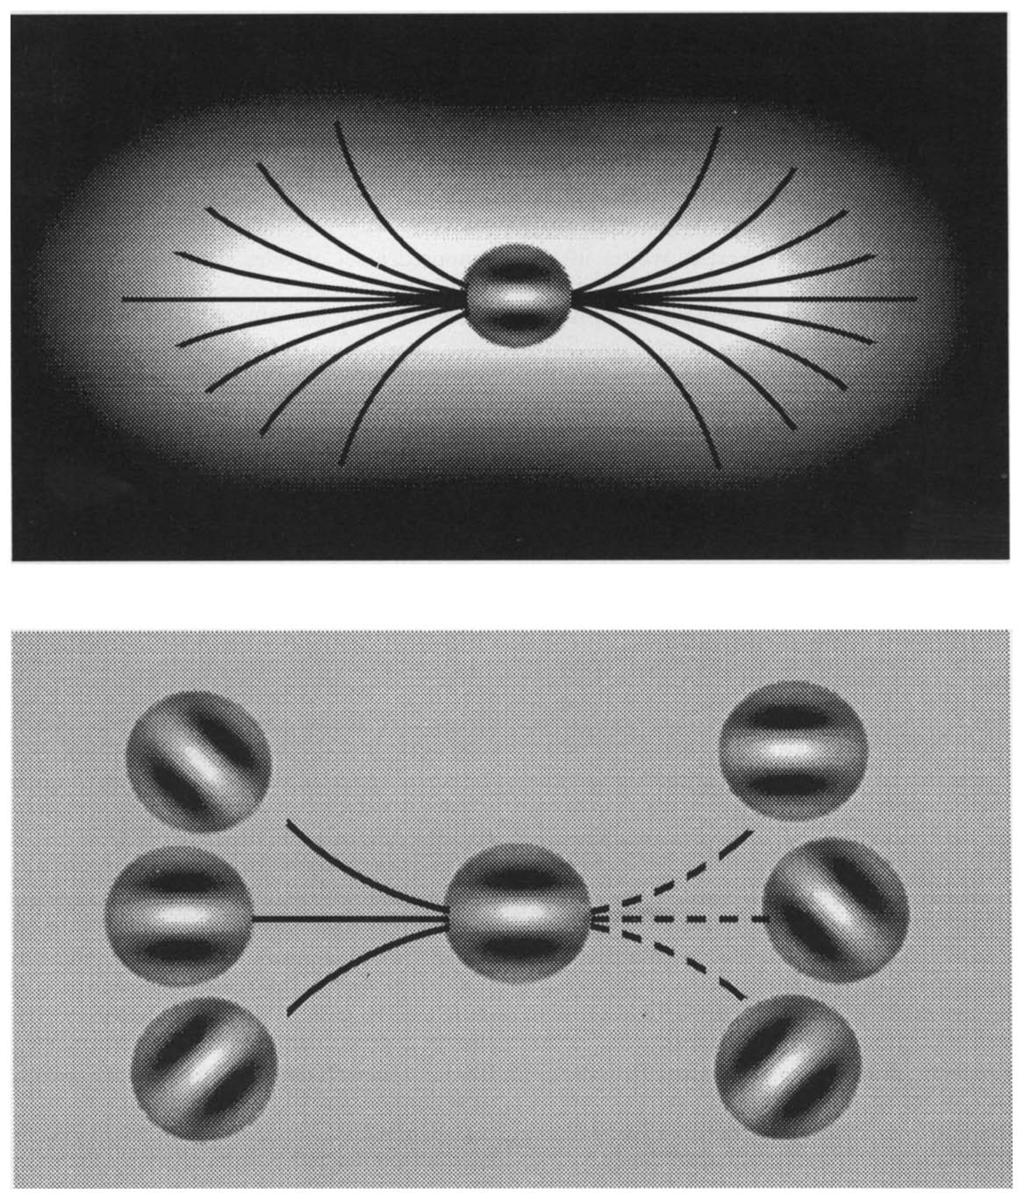 190 DAVID J. FIELD et al particular, fractal models have been found to provide an effective description of many natural image